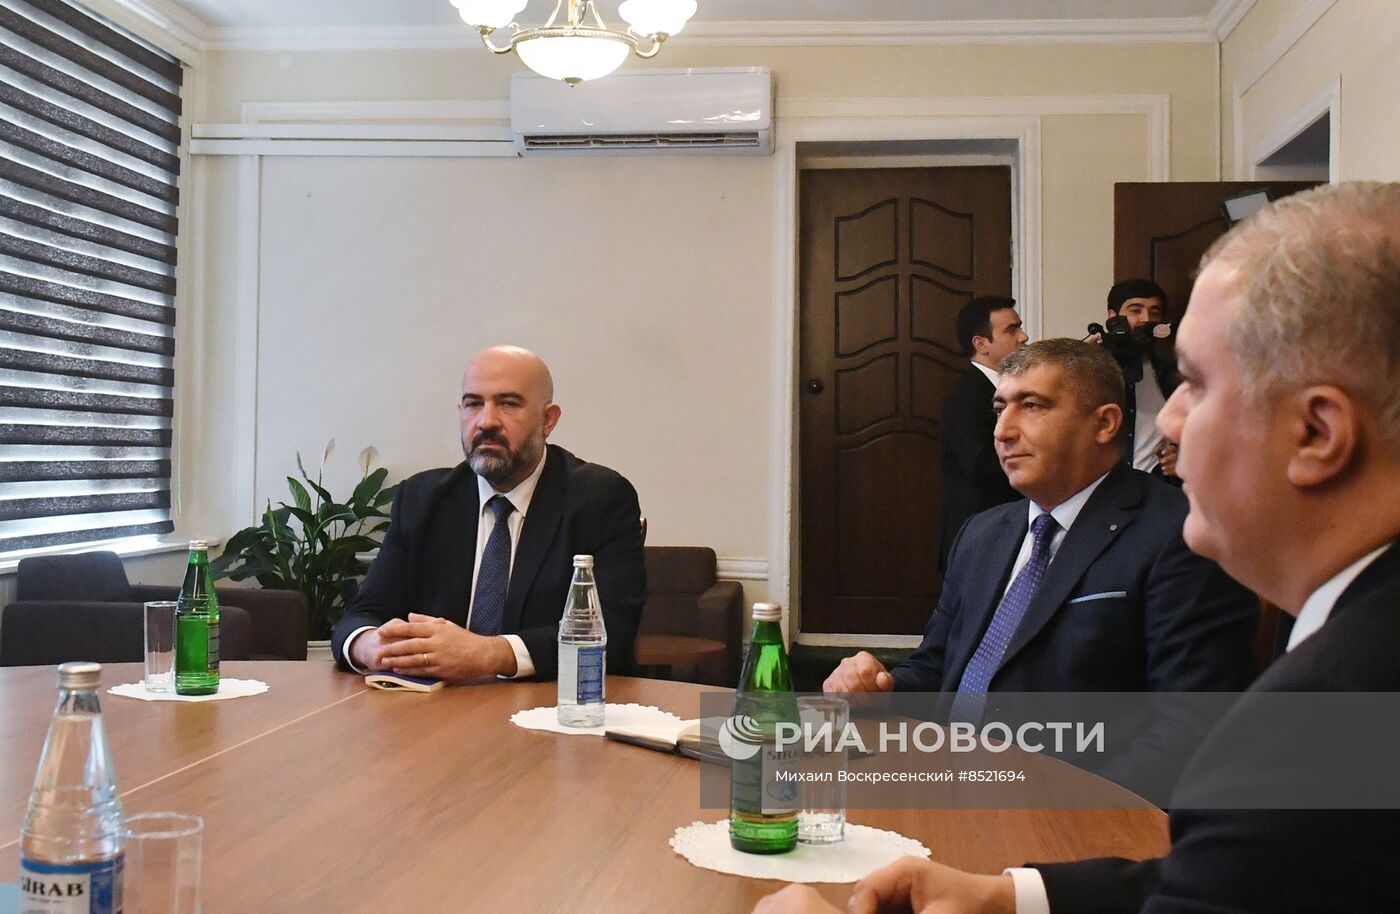 Встреча представителей Азербайджана с делегацией армян Карабаха в г. Евлах